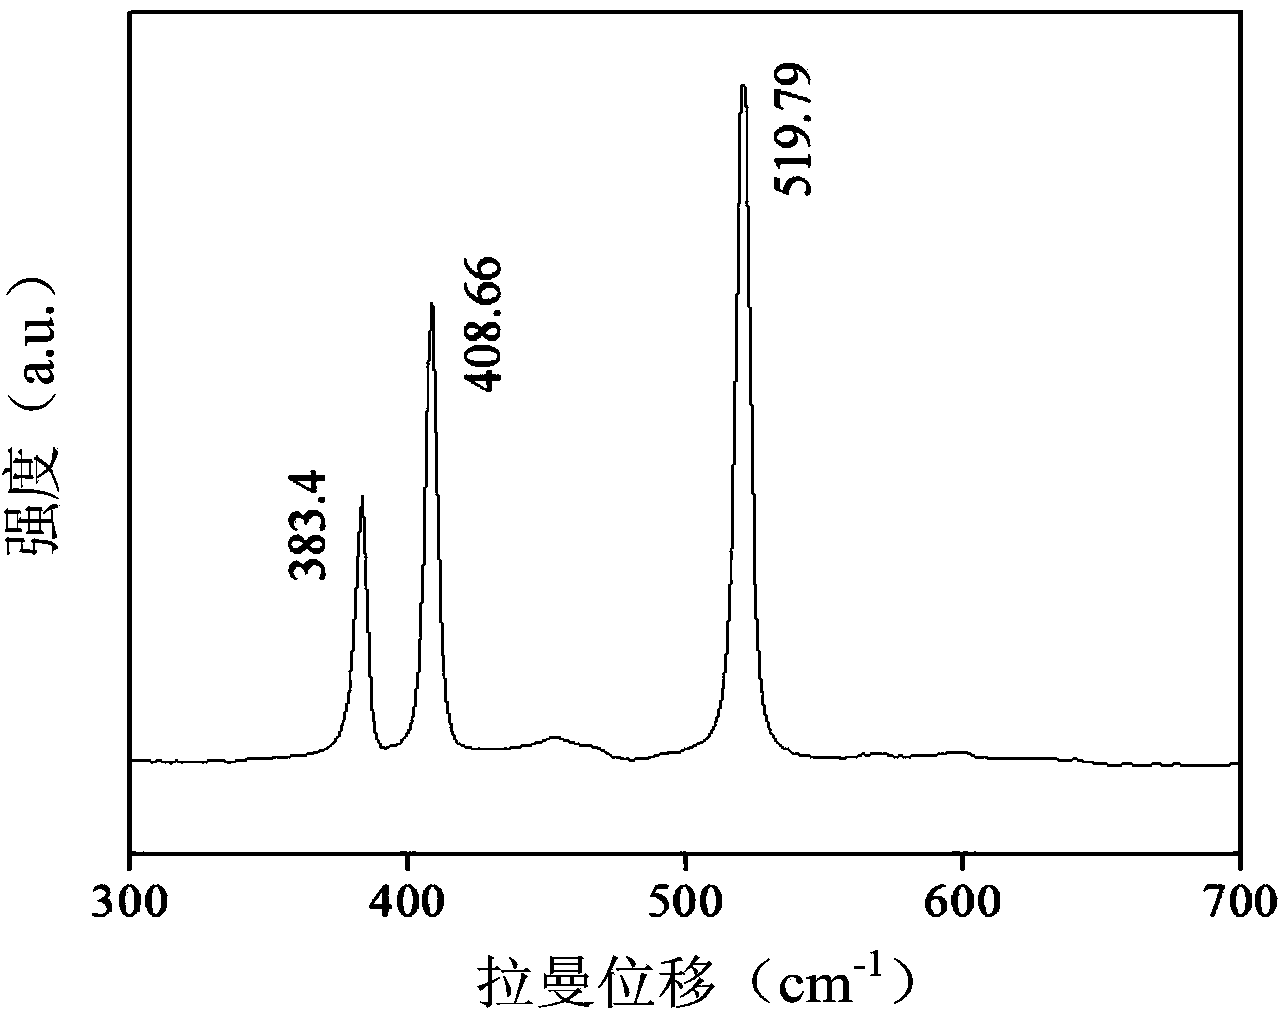 Method for preparing molybdenum disulfide film for field emission device